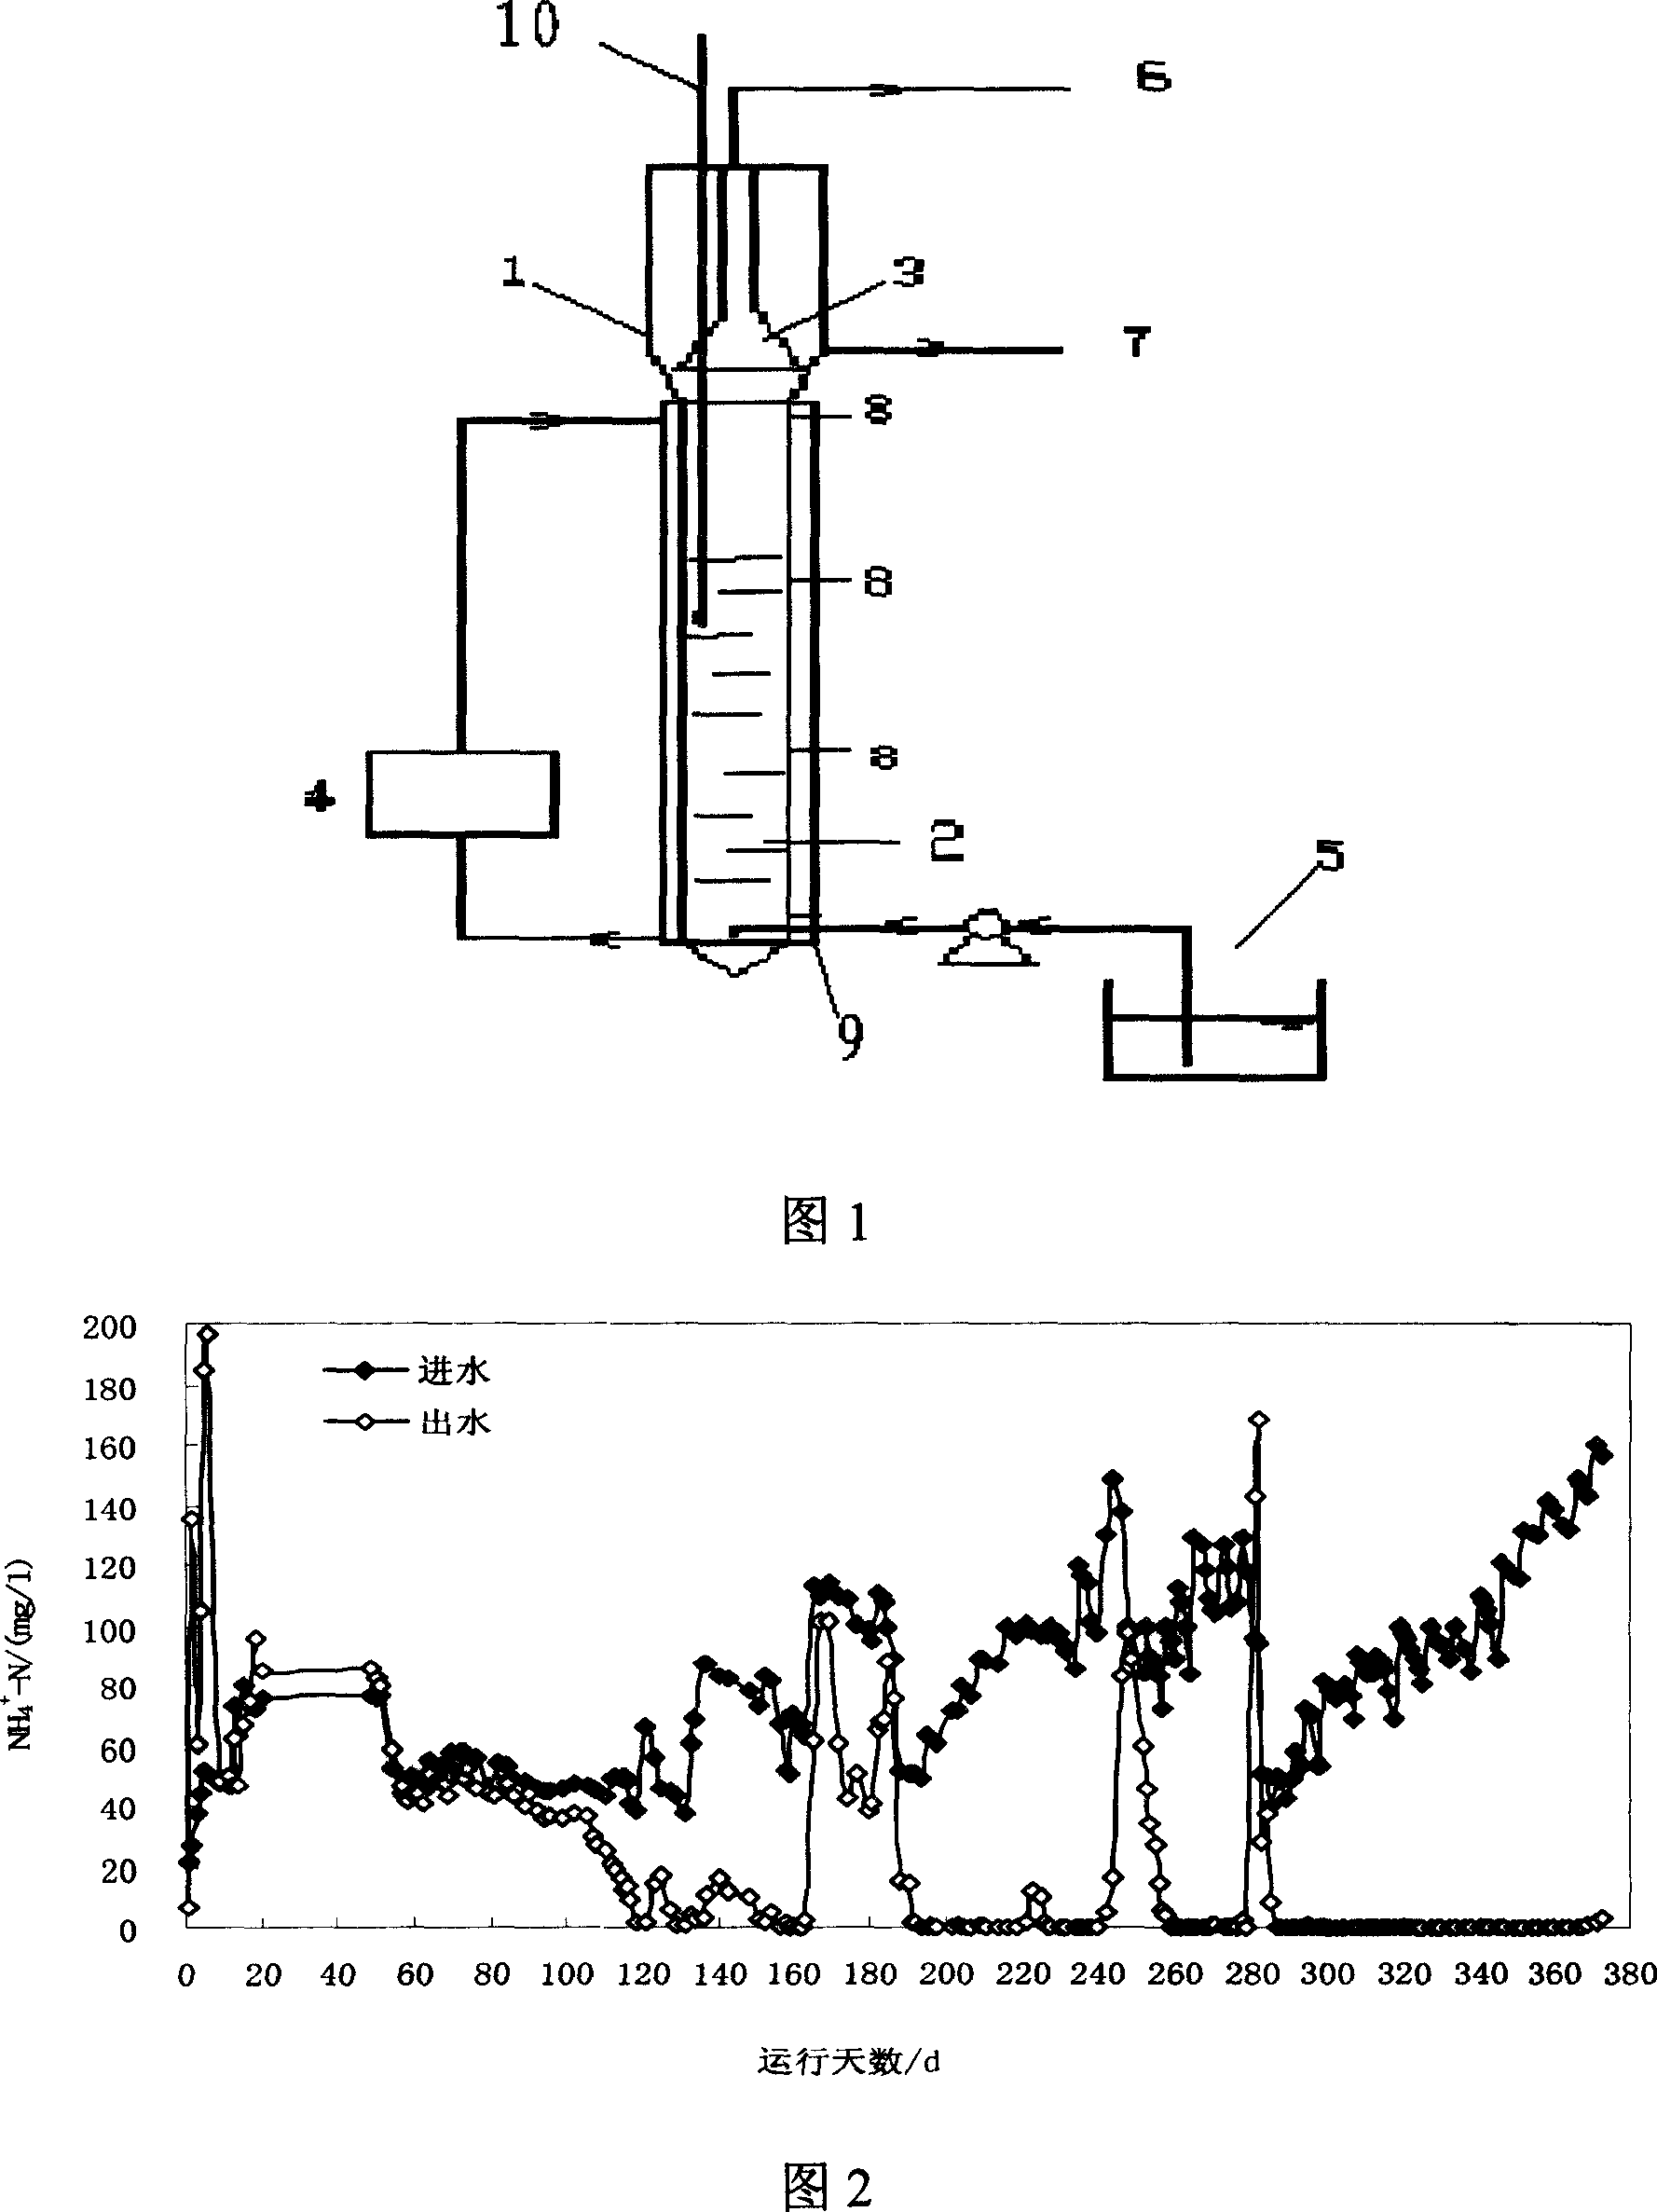 Temperature controlled USAB anaerobic ammoxidation strain denitrogenation method and its apparatus